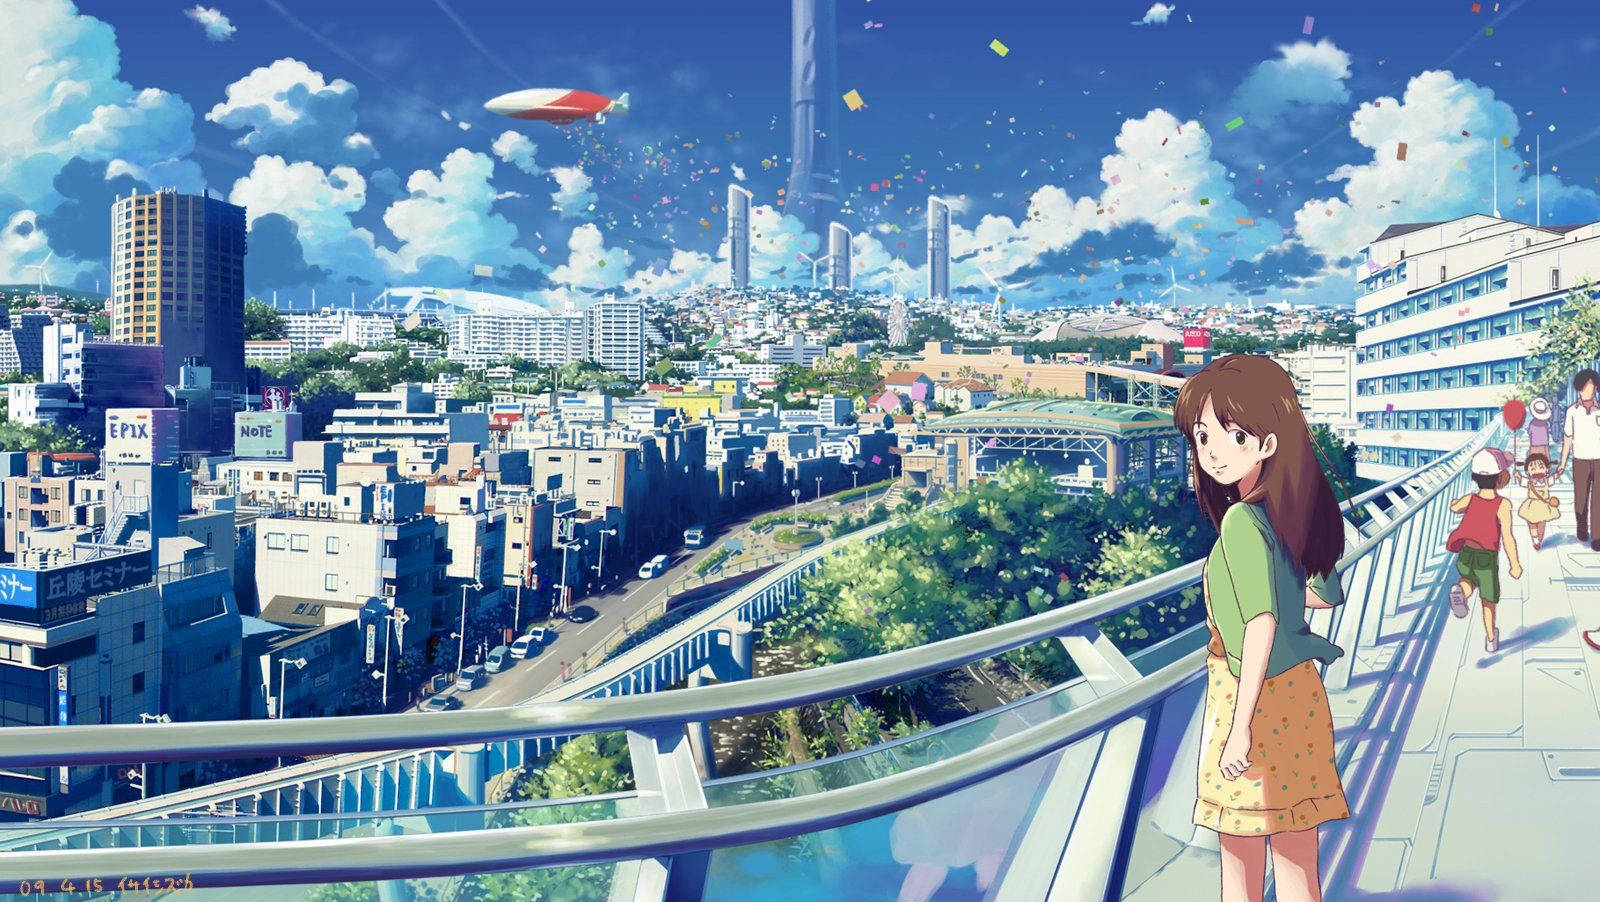 Bright Scenic Anime City